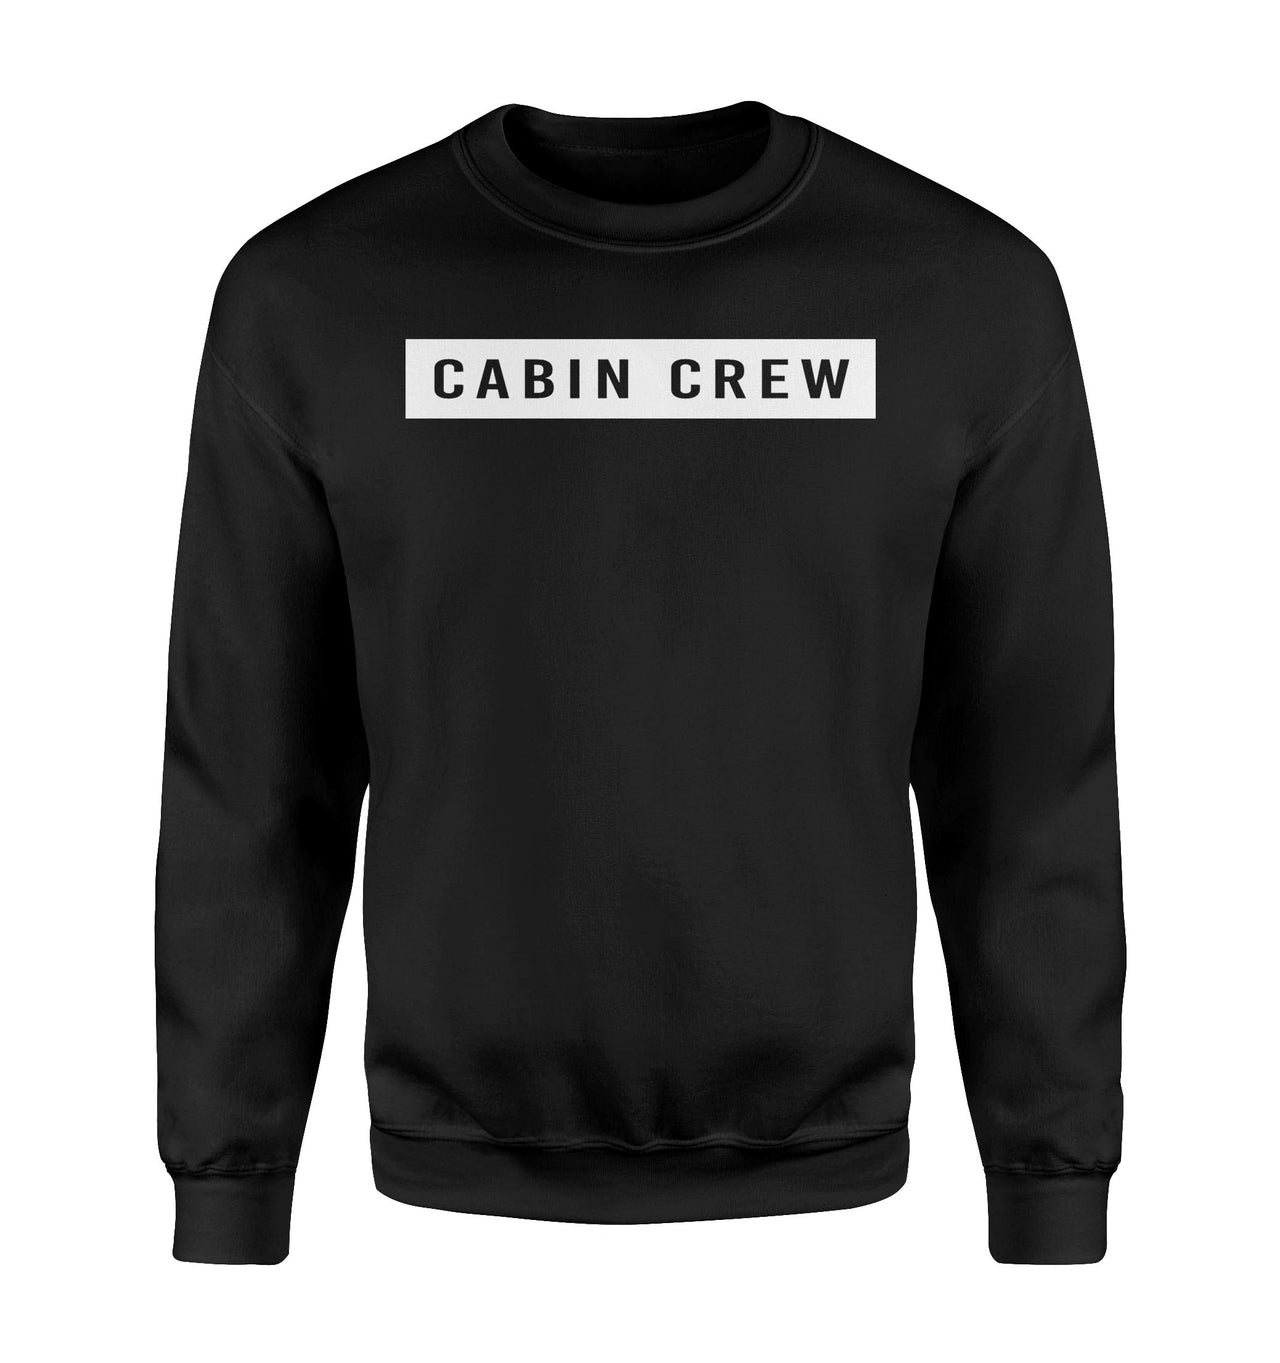 Cabin Crew Text Designed Sweatshirts